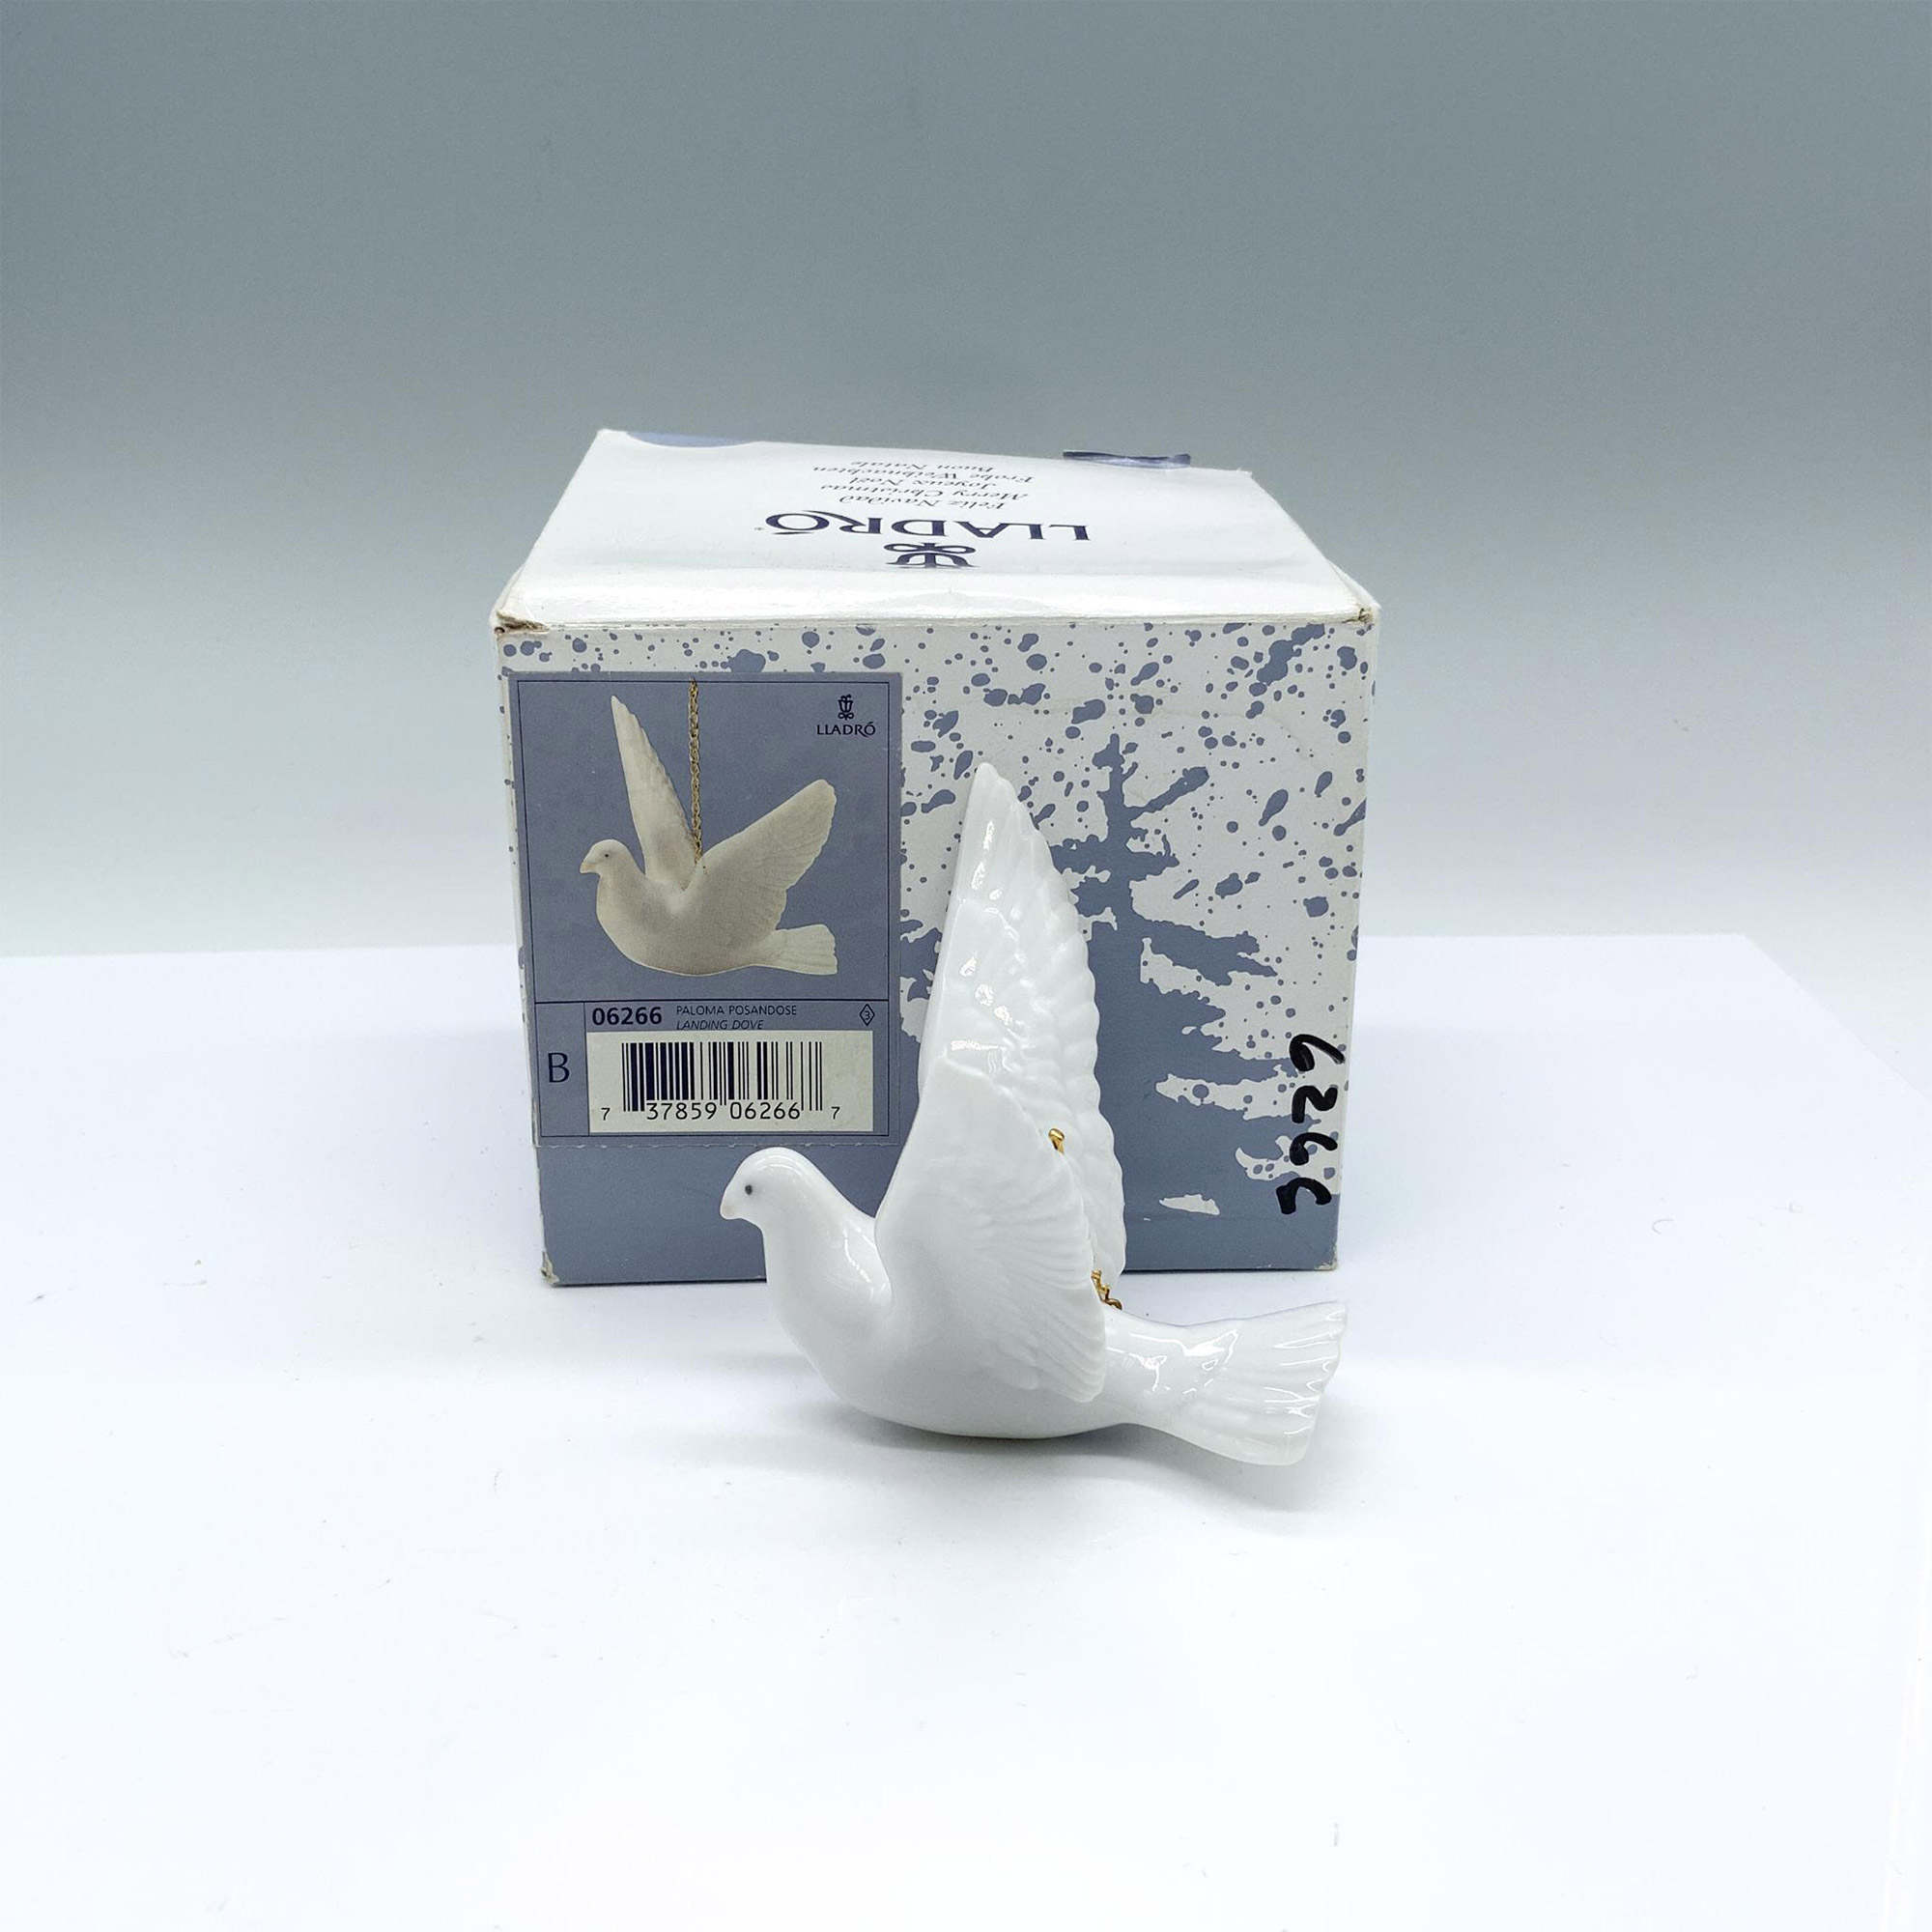 Lladro Porcelain Ornament, Landing Dove 1006266 - Image 6 of 6